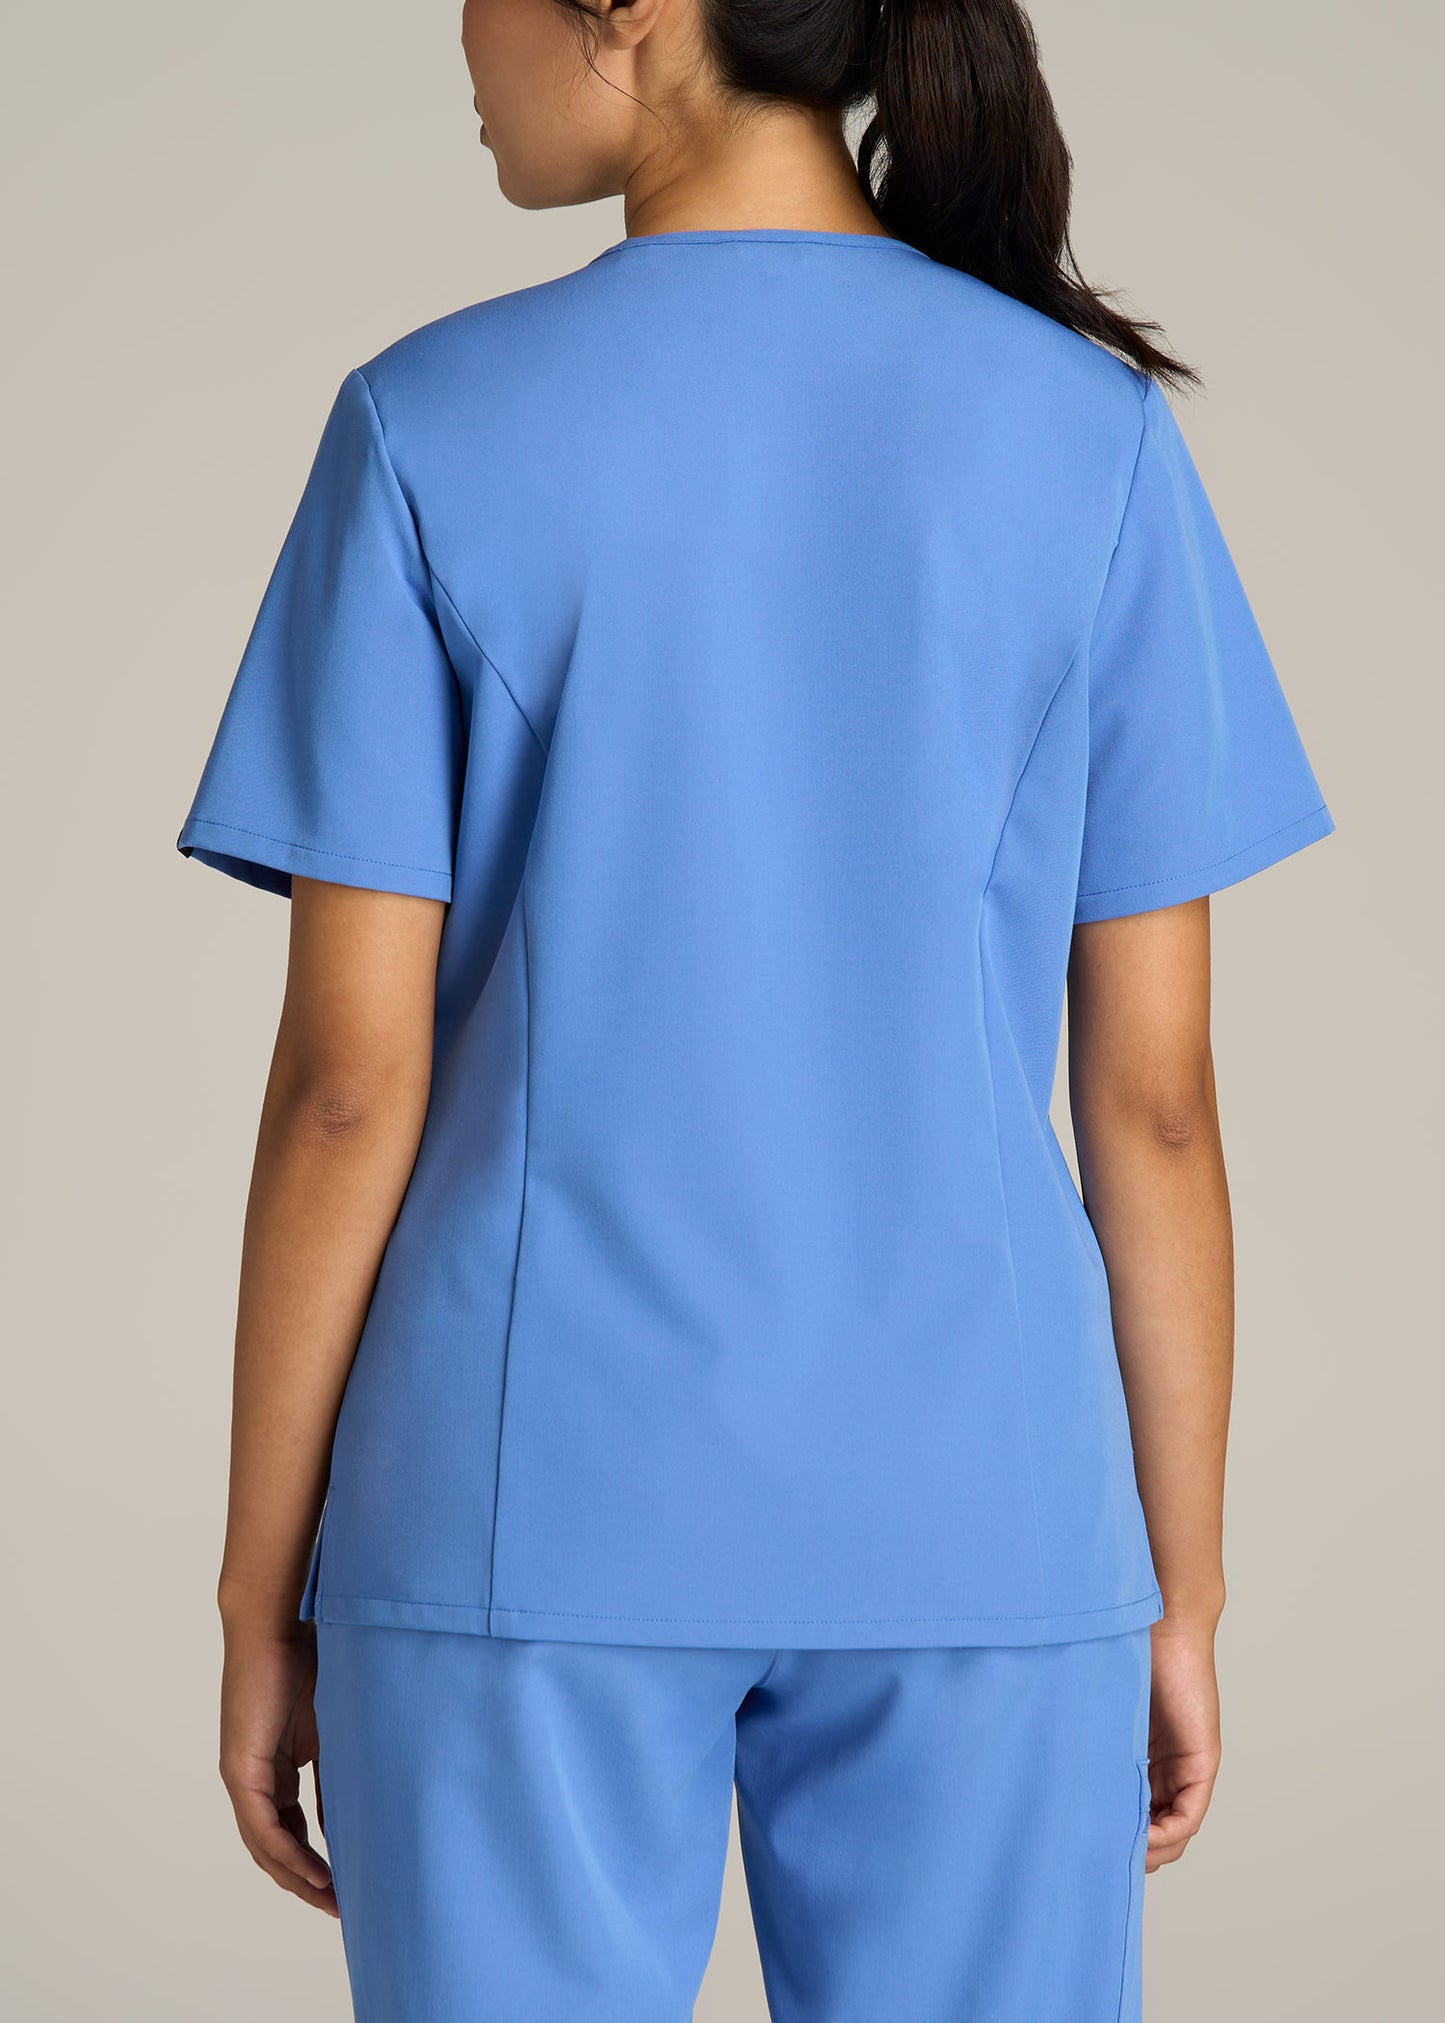 Edge By IRG Short Sleeve Scrub Top V Neck Shirt Women's Size 3XL, Blue